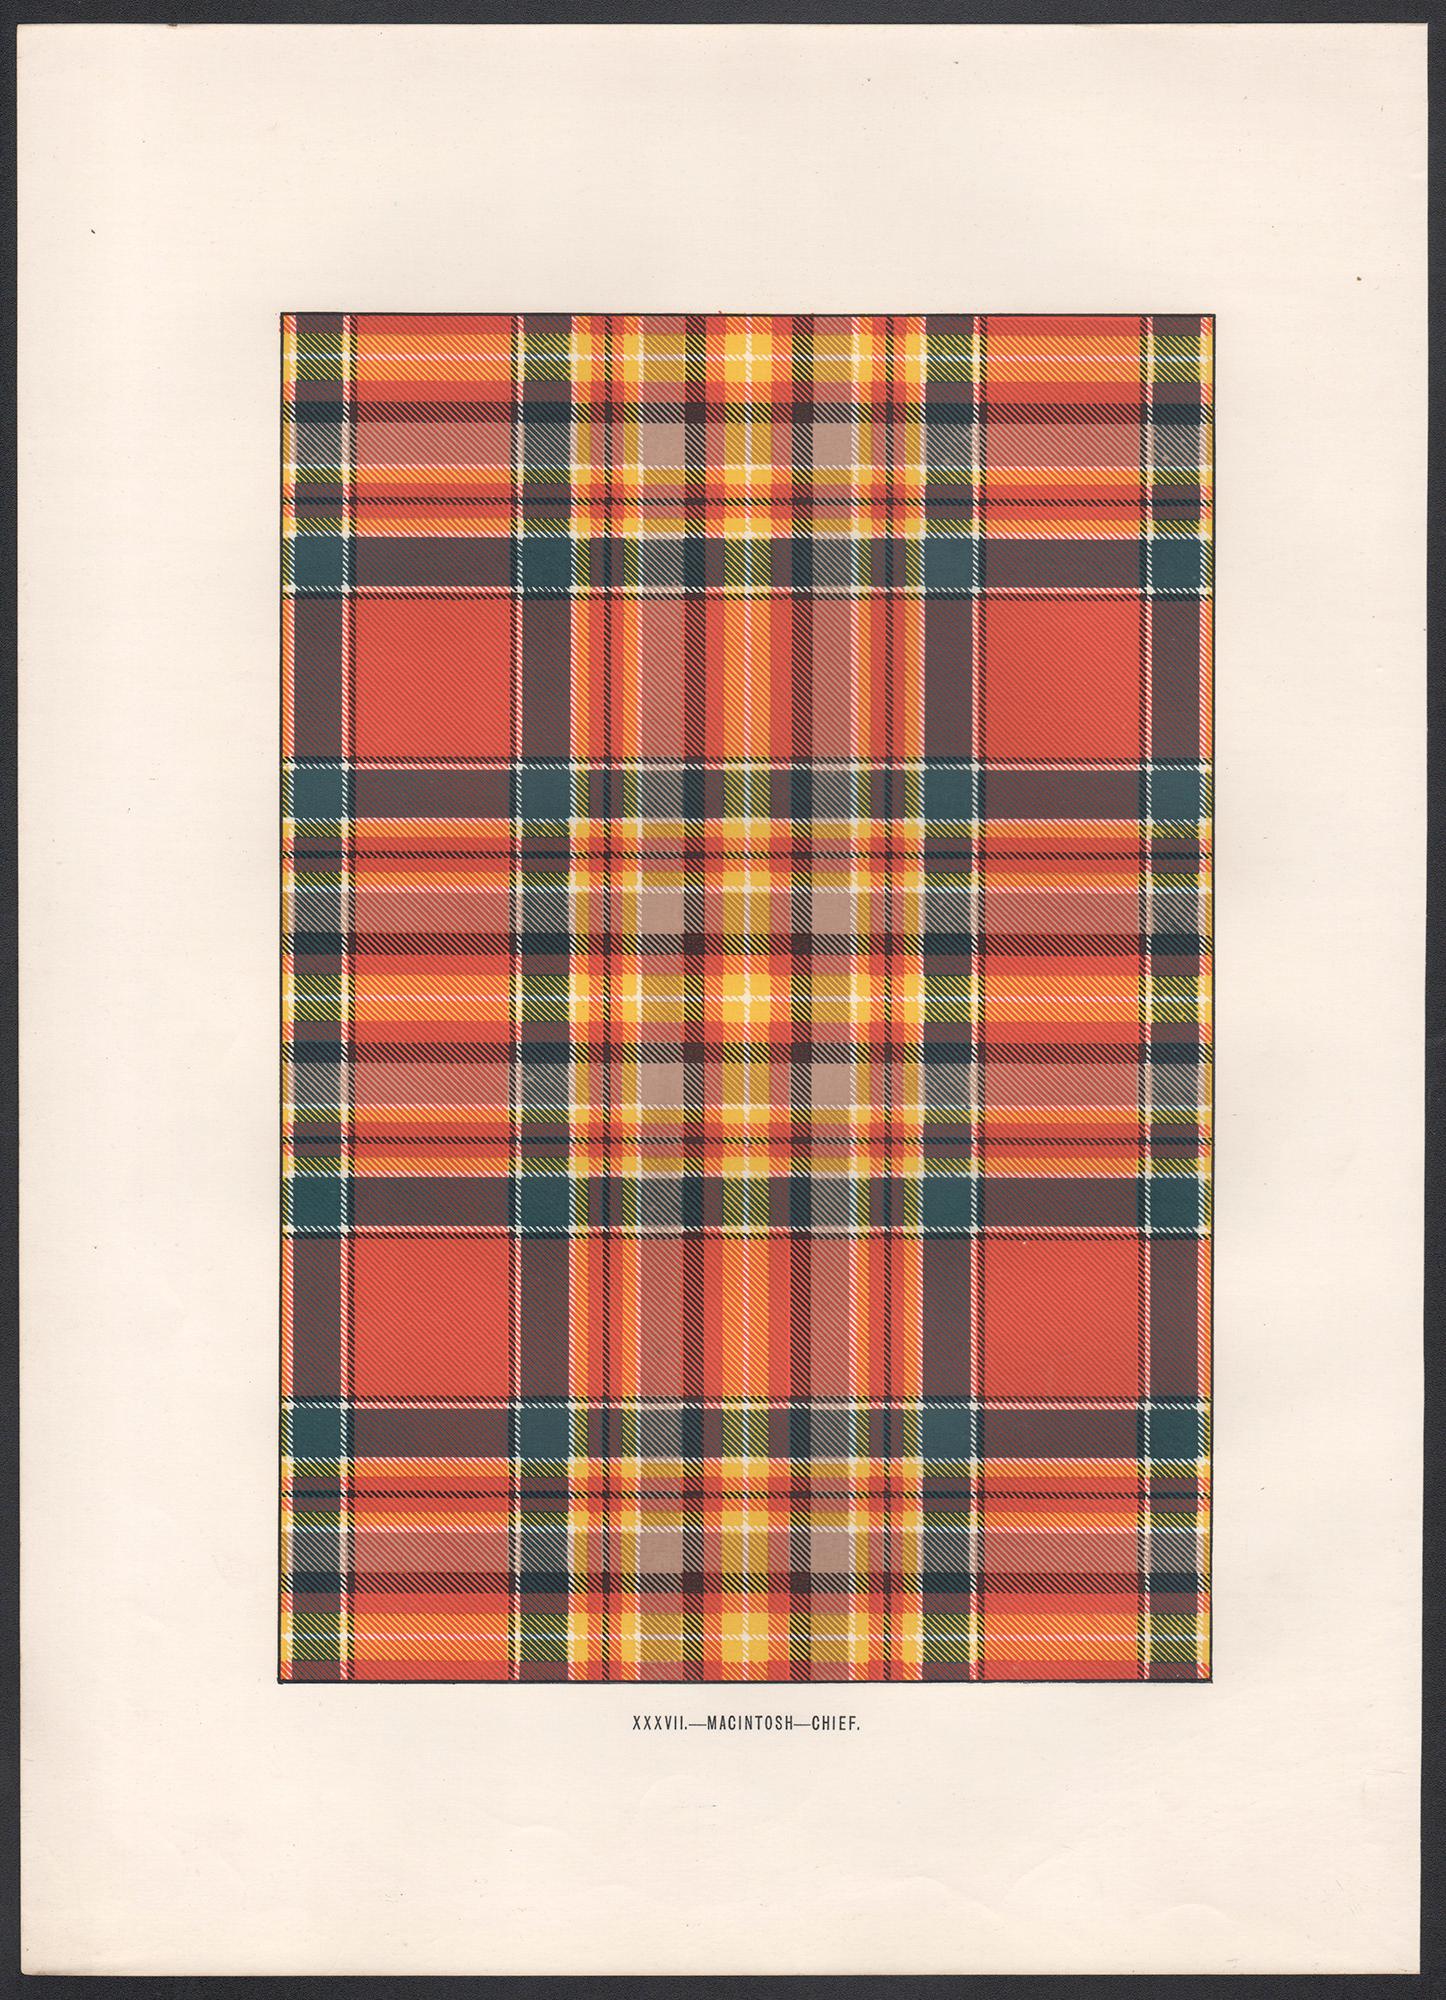 MacIntosh - Chief (Tartan), Scottish Scotland art design lithograph print - Print by Unknown